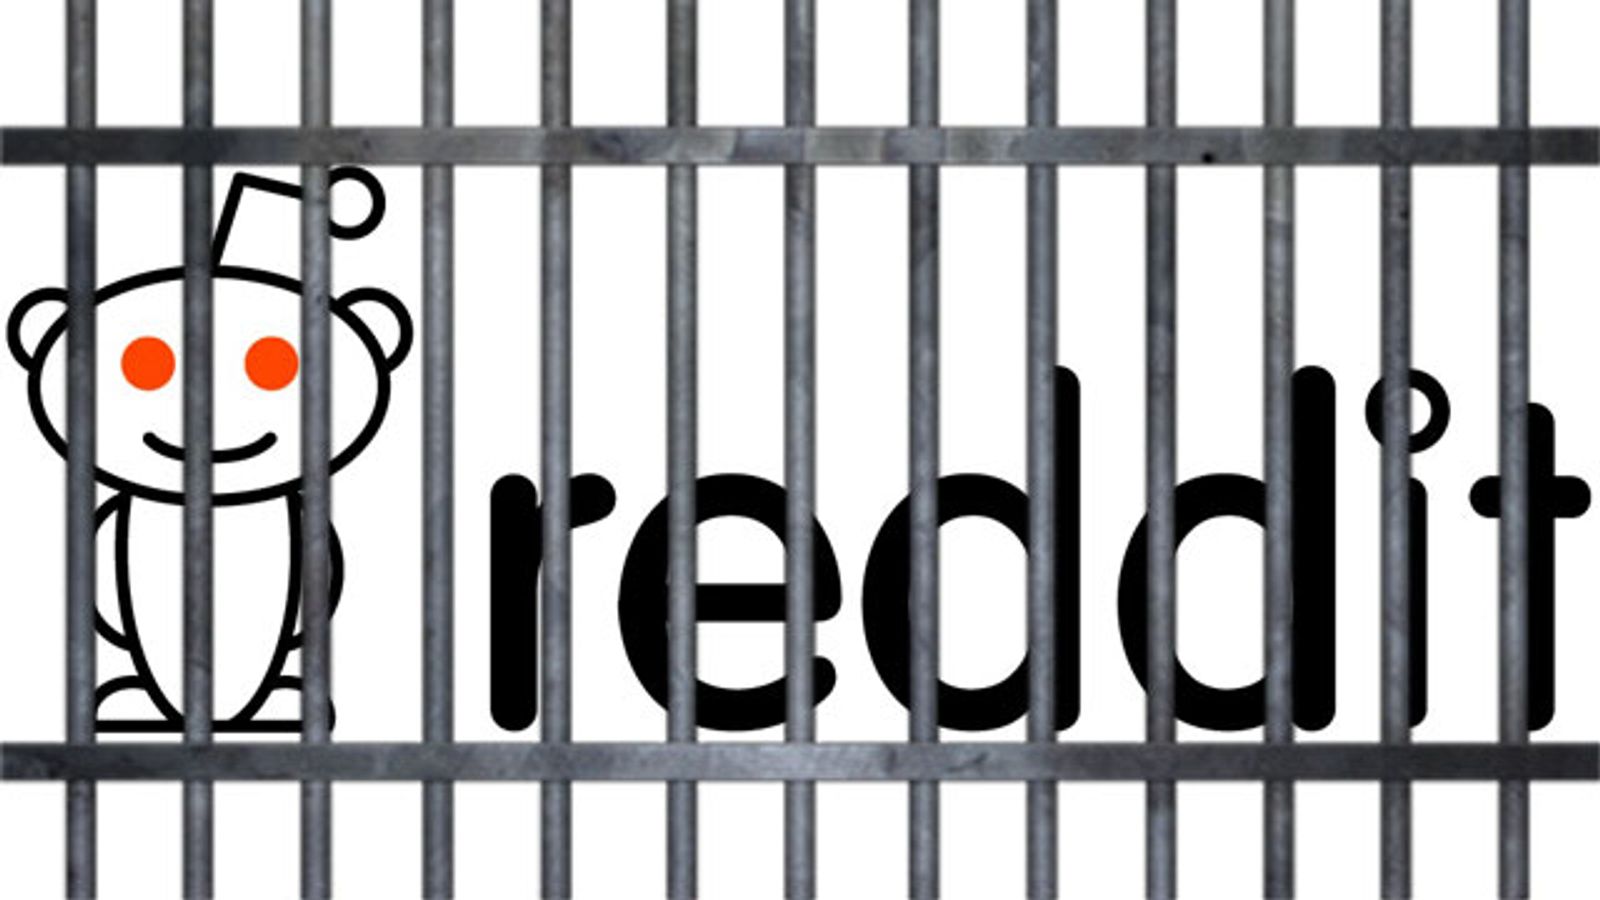 Reddit is Still Home to Jailbait